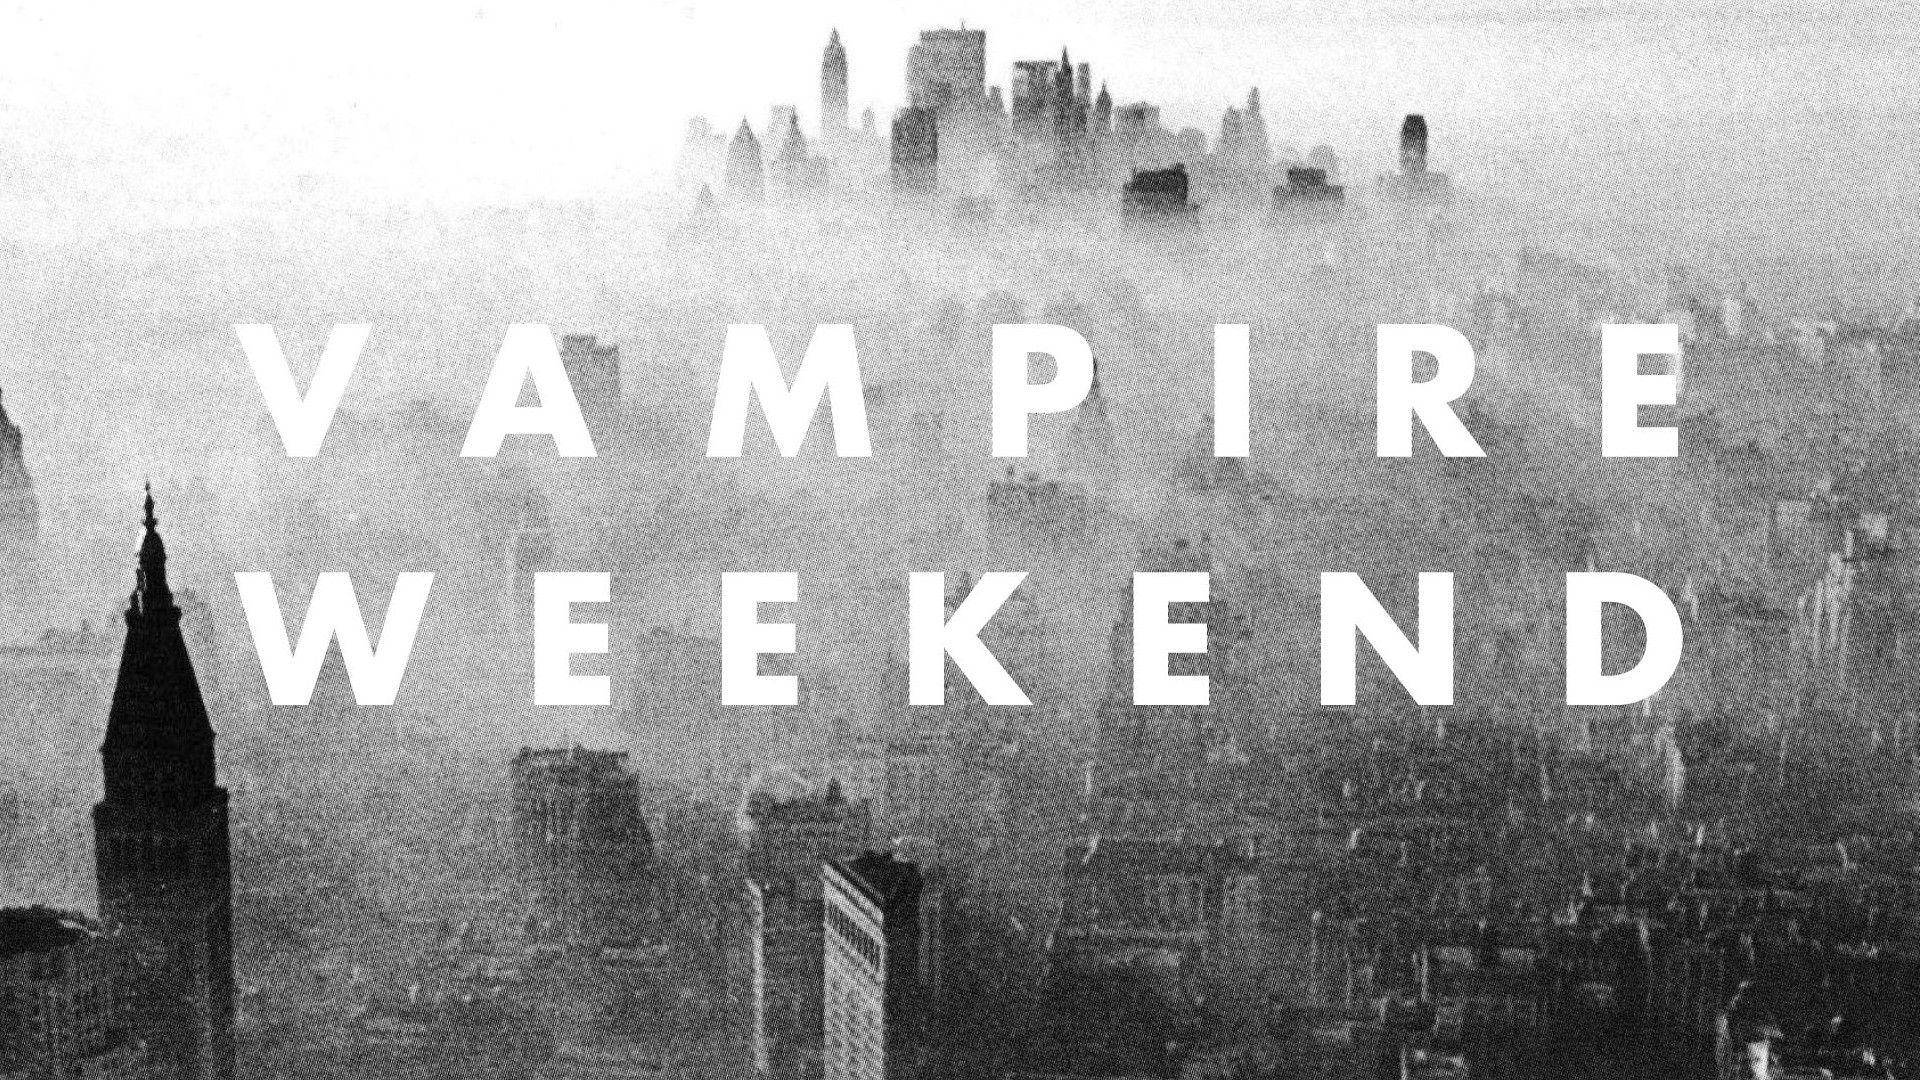 Vampire weekend album cover - Vampire